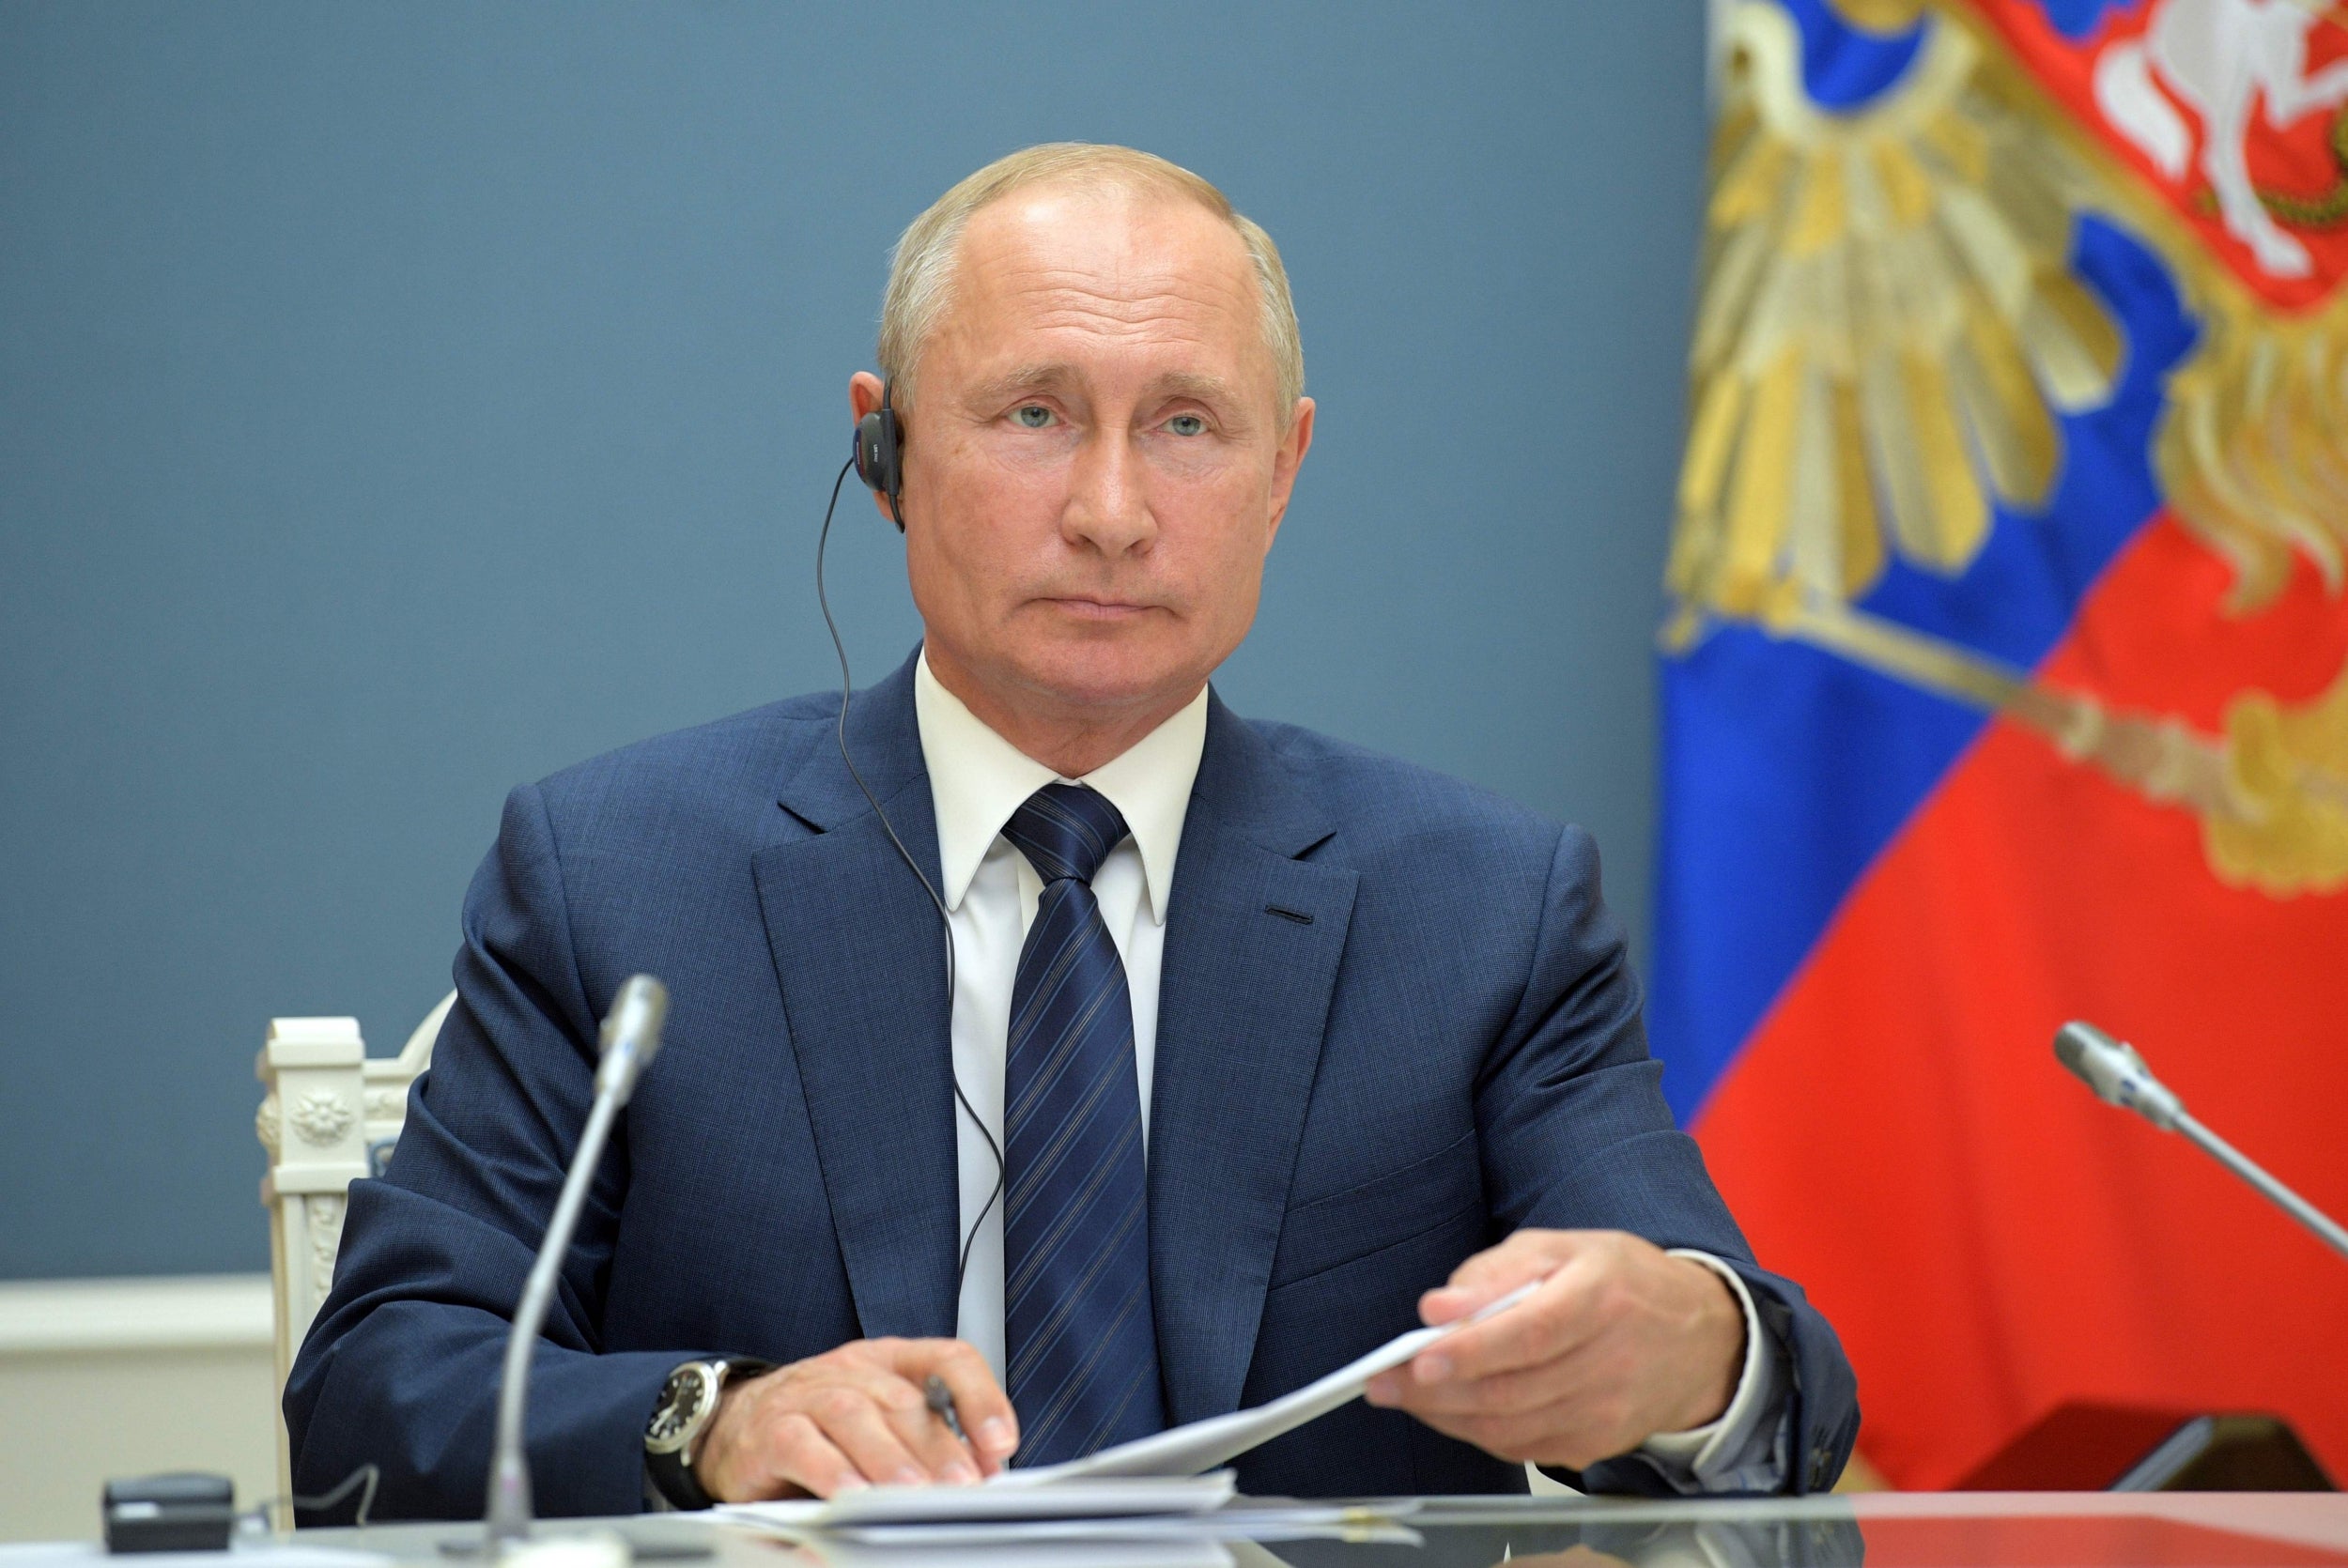 Related Video: Vladimir Putin votes in referendum on constitutional reform